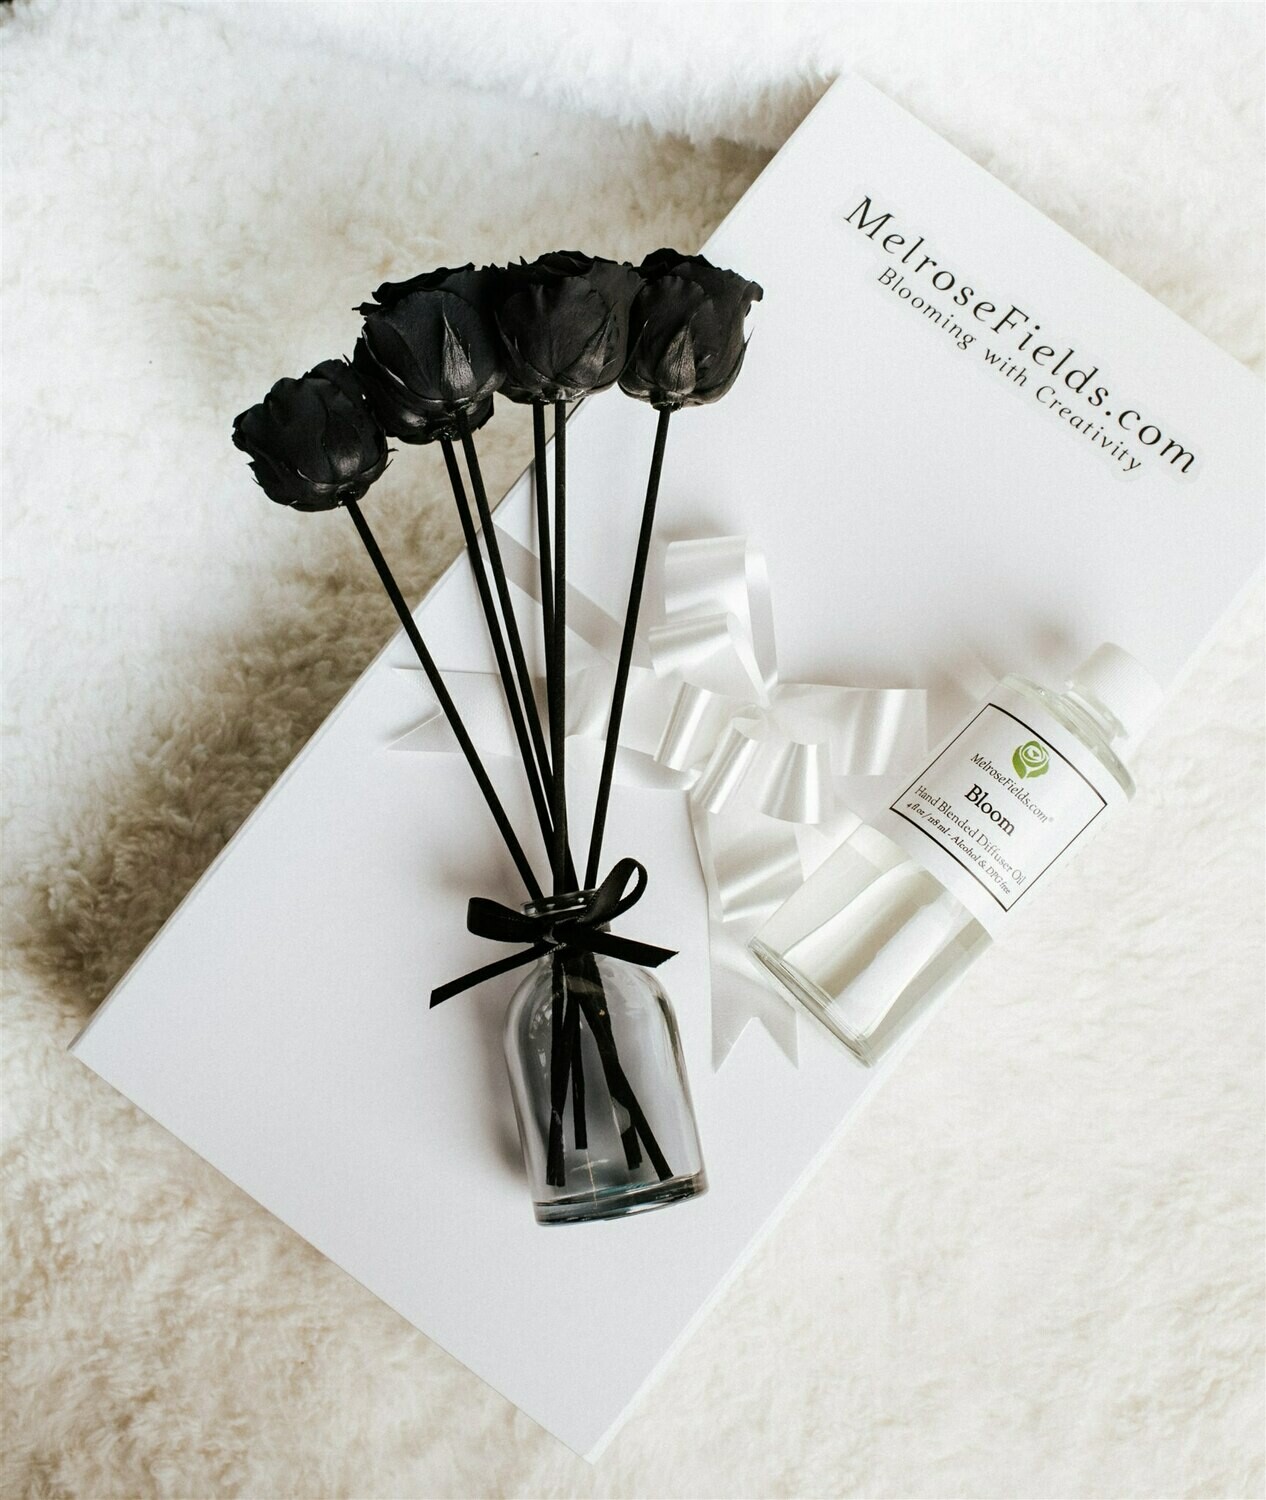 MelroseFields.com® Mini Black Rose Reed Diffuser Kit